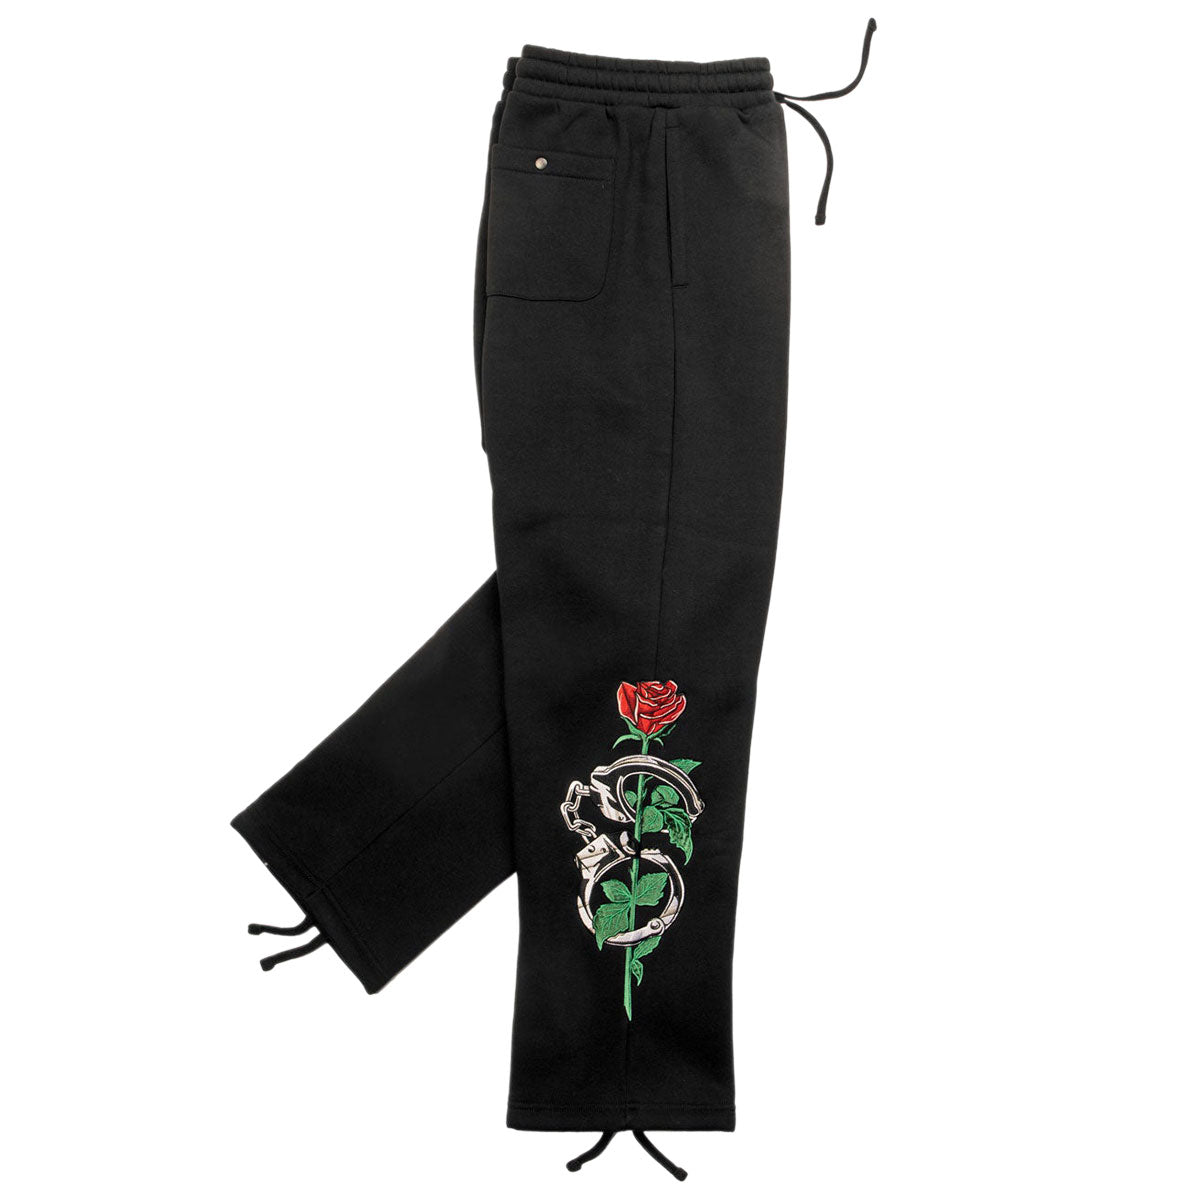 DGK Freedom Fleece Pants - Black image 2